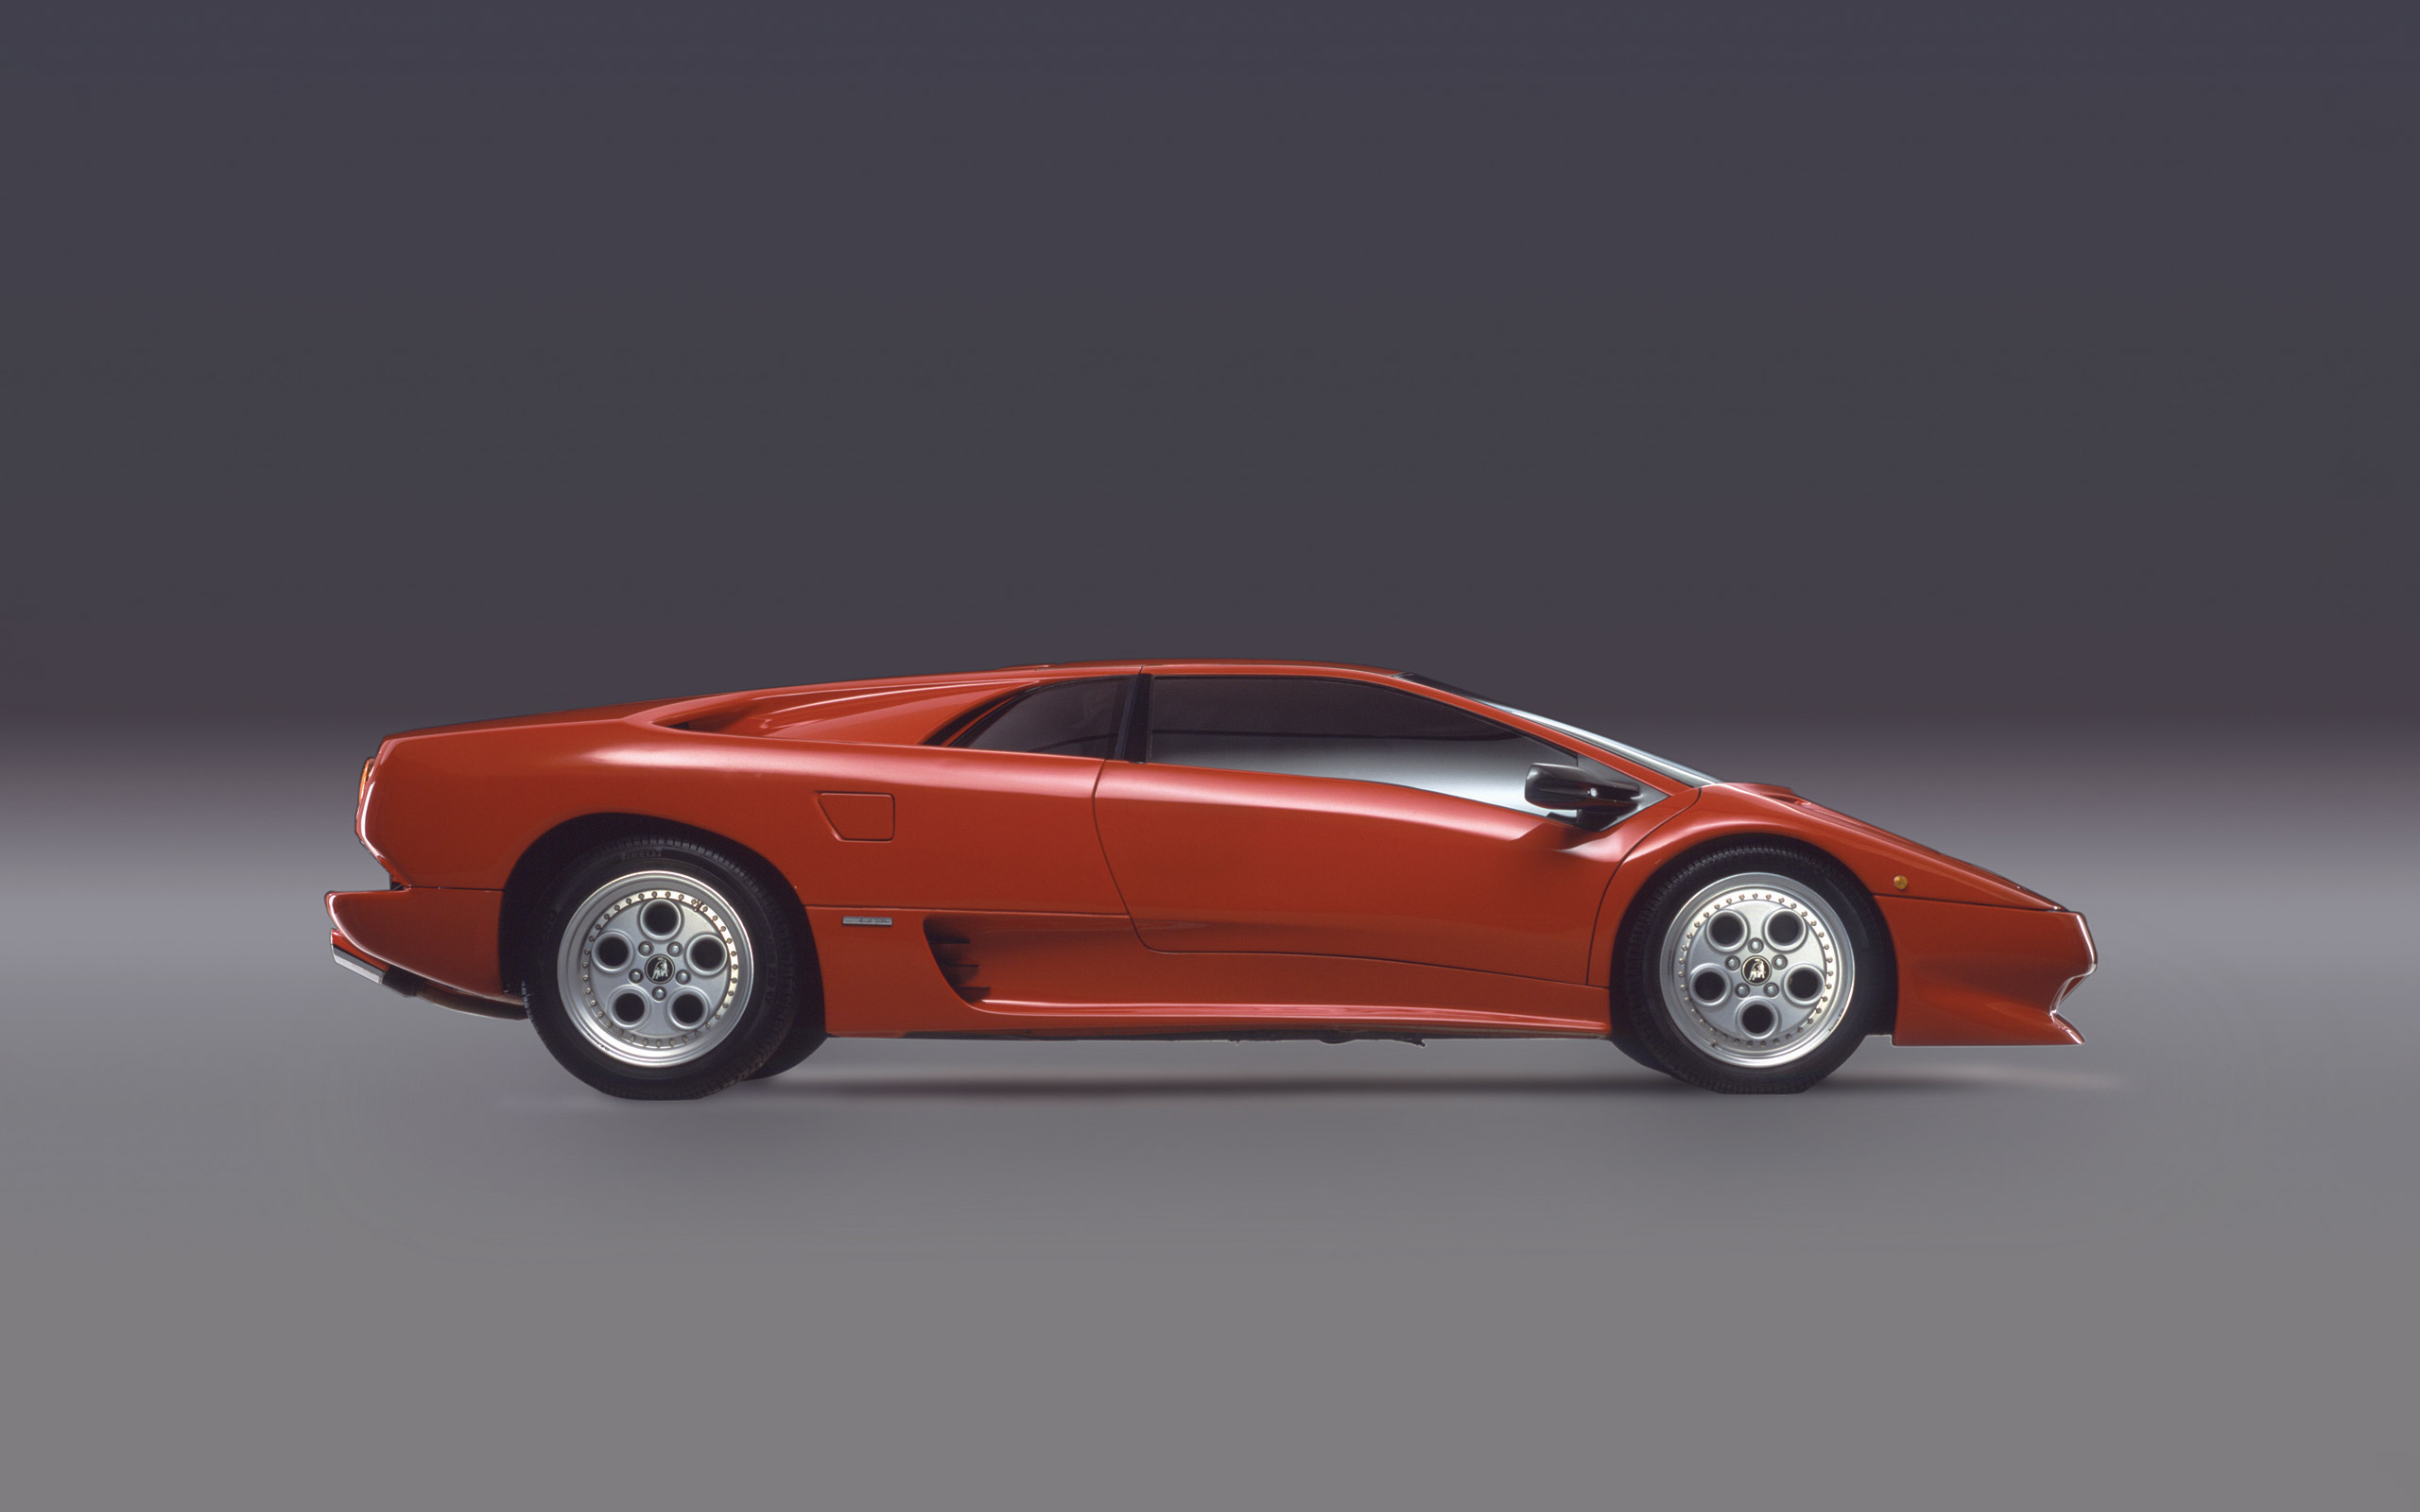  1990 Lamborghini Diablo Wallpaper.